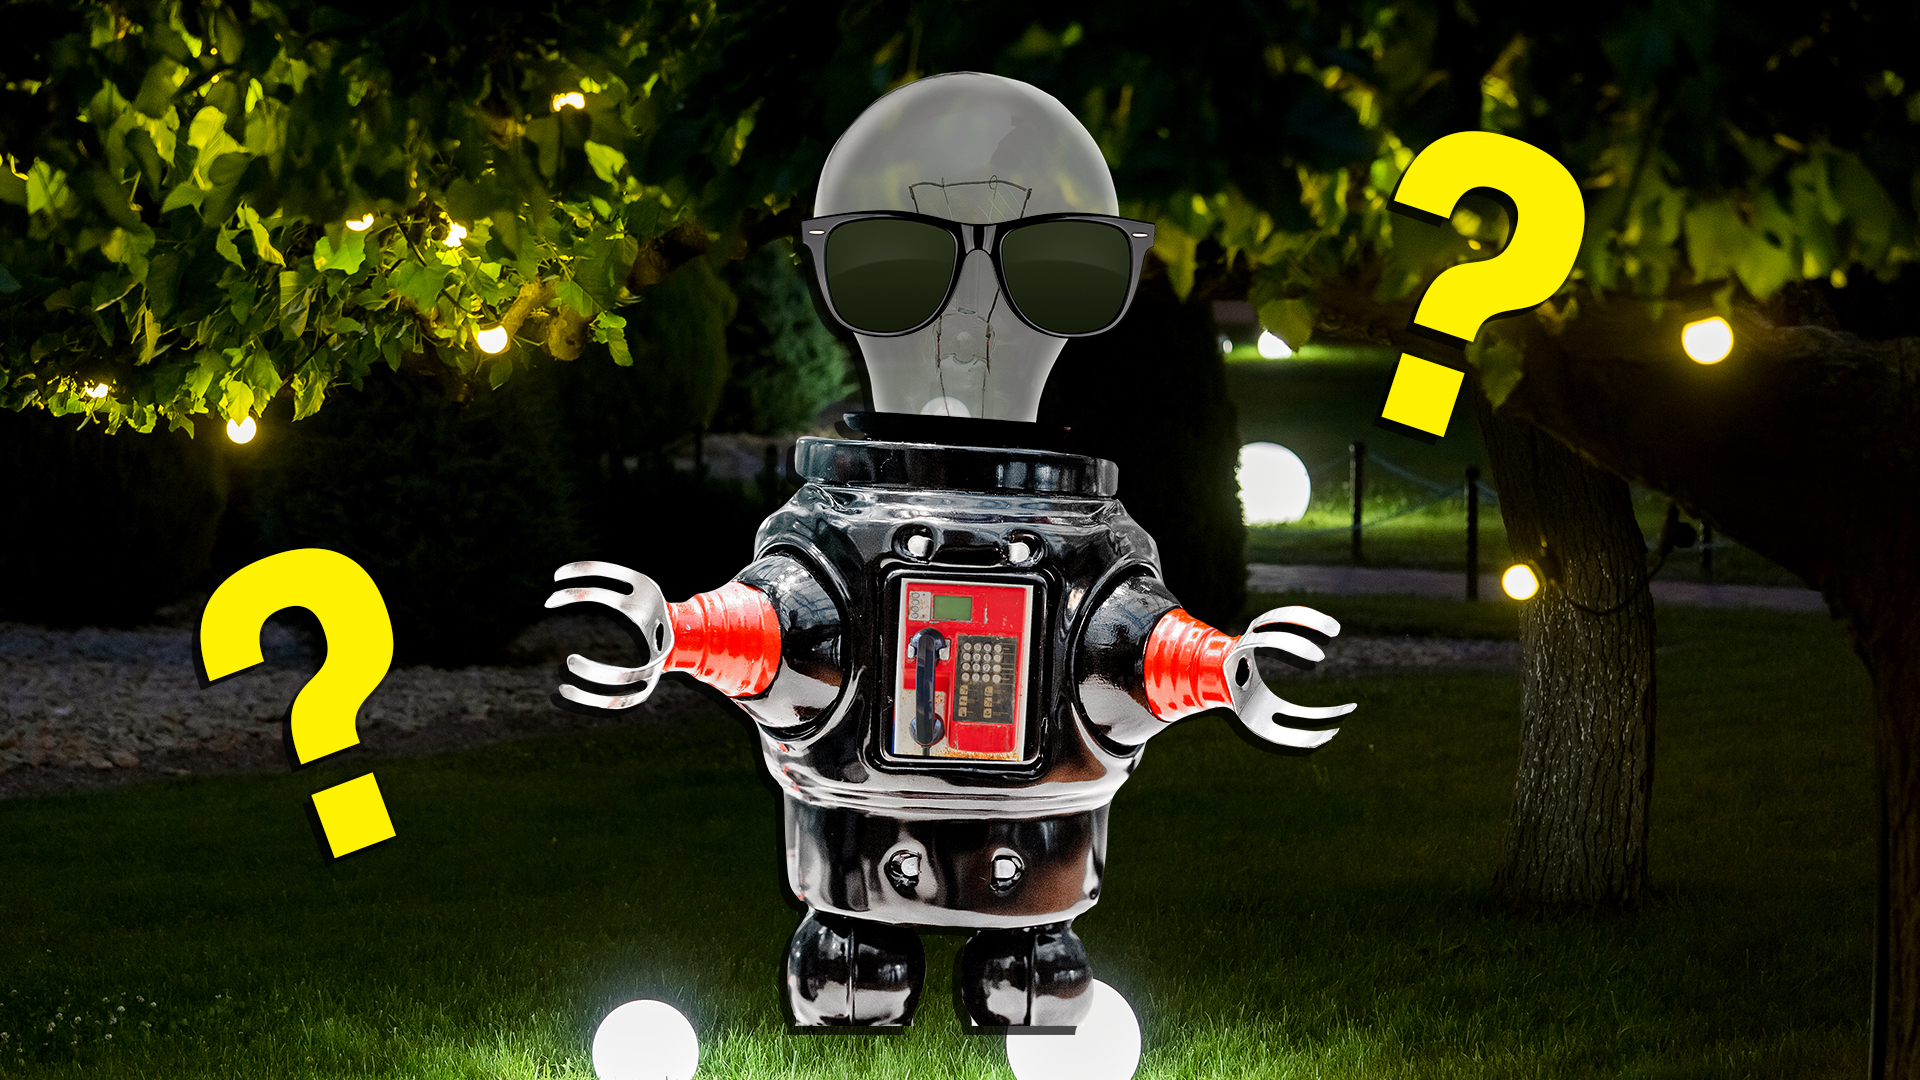 A confused robot in a dark garden